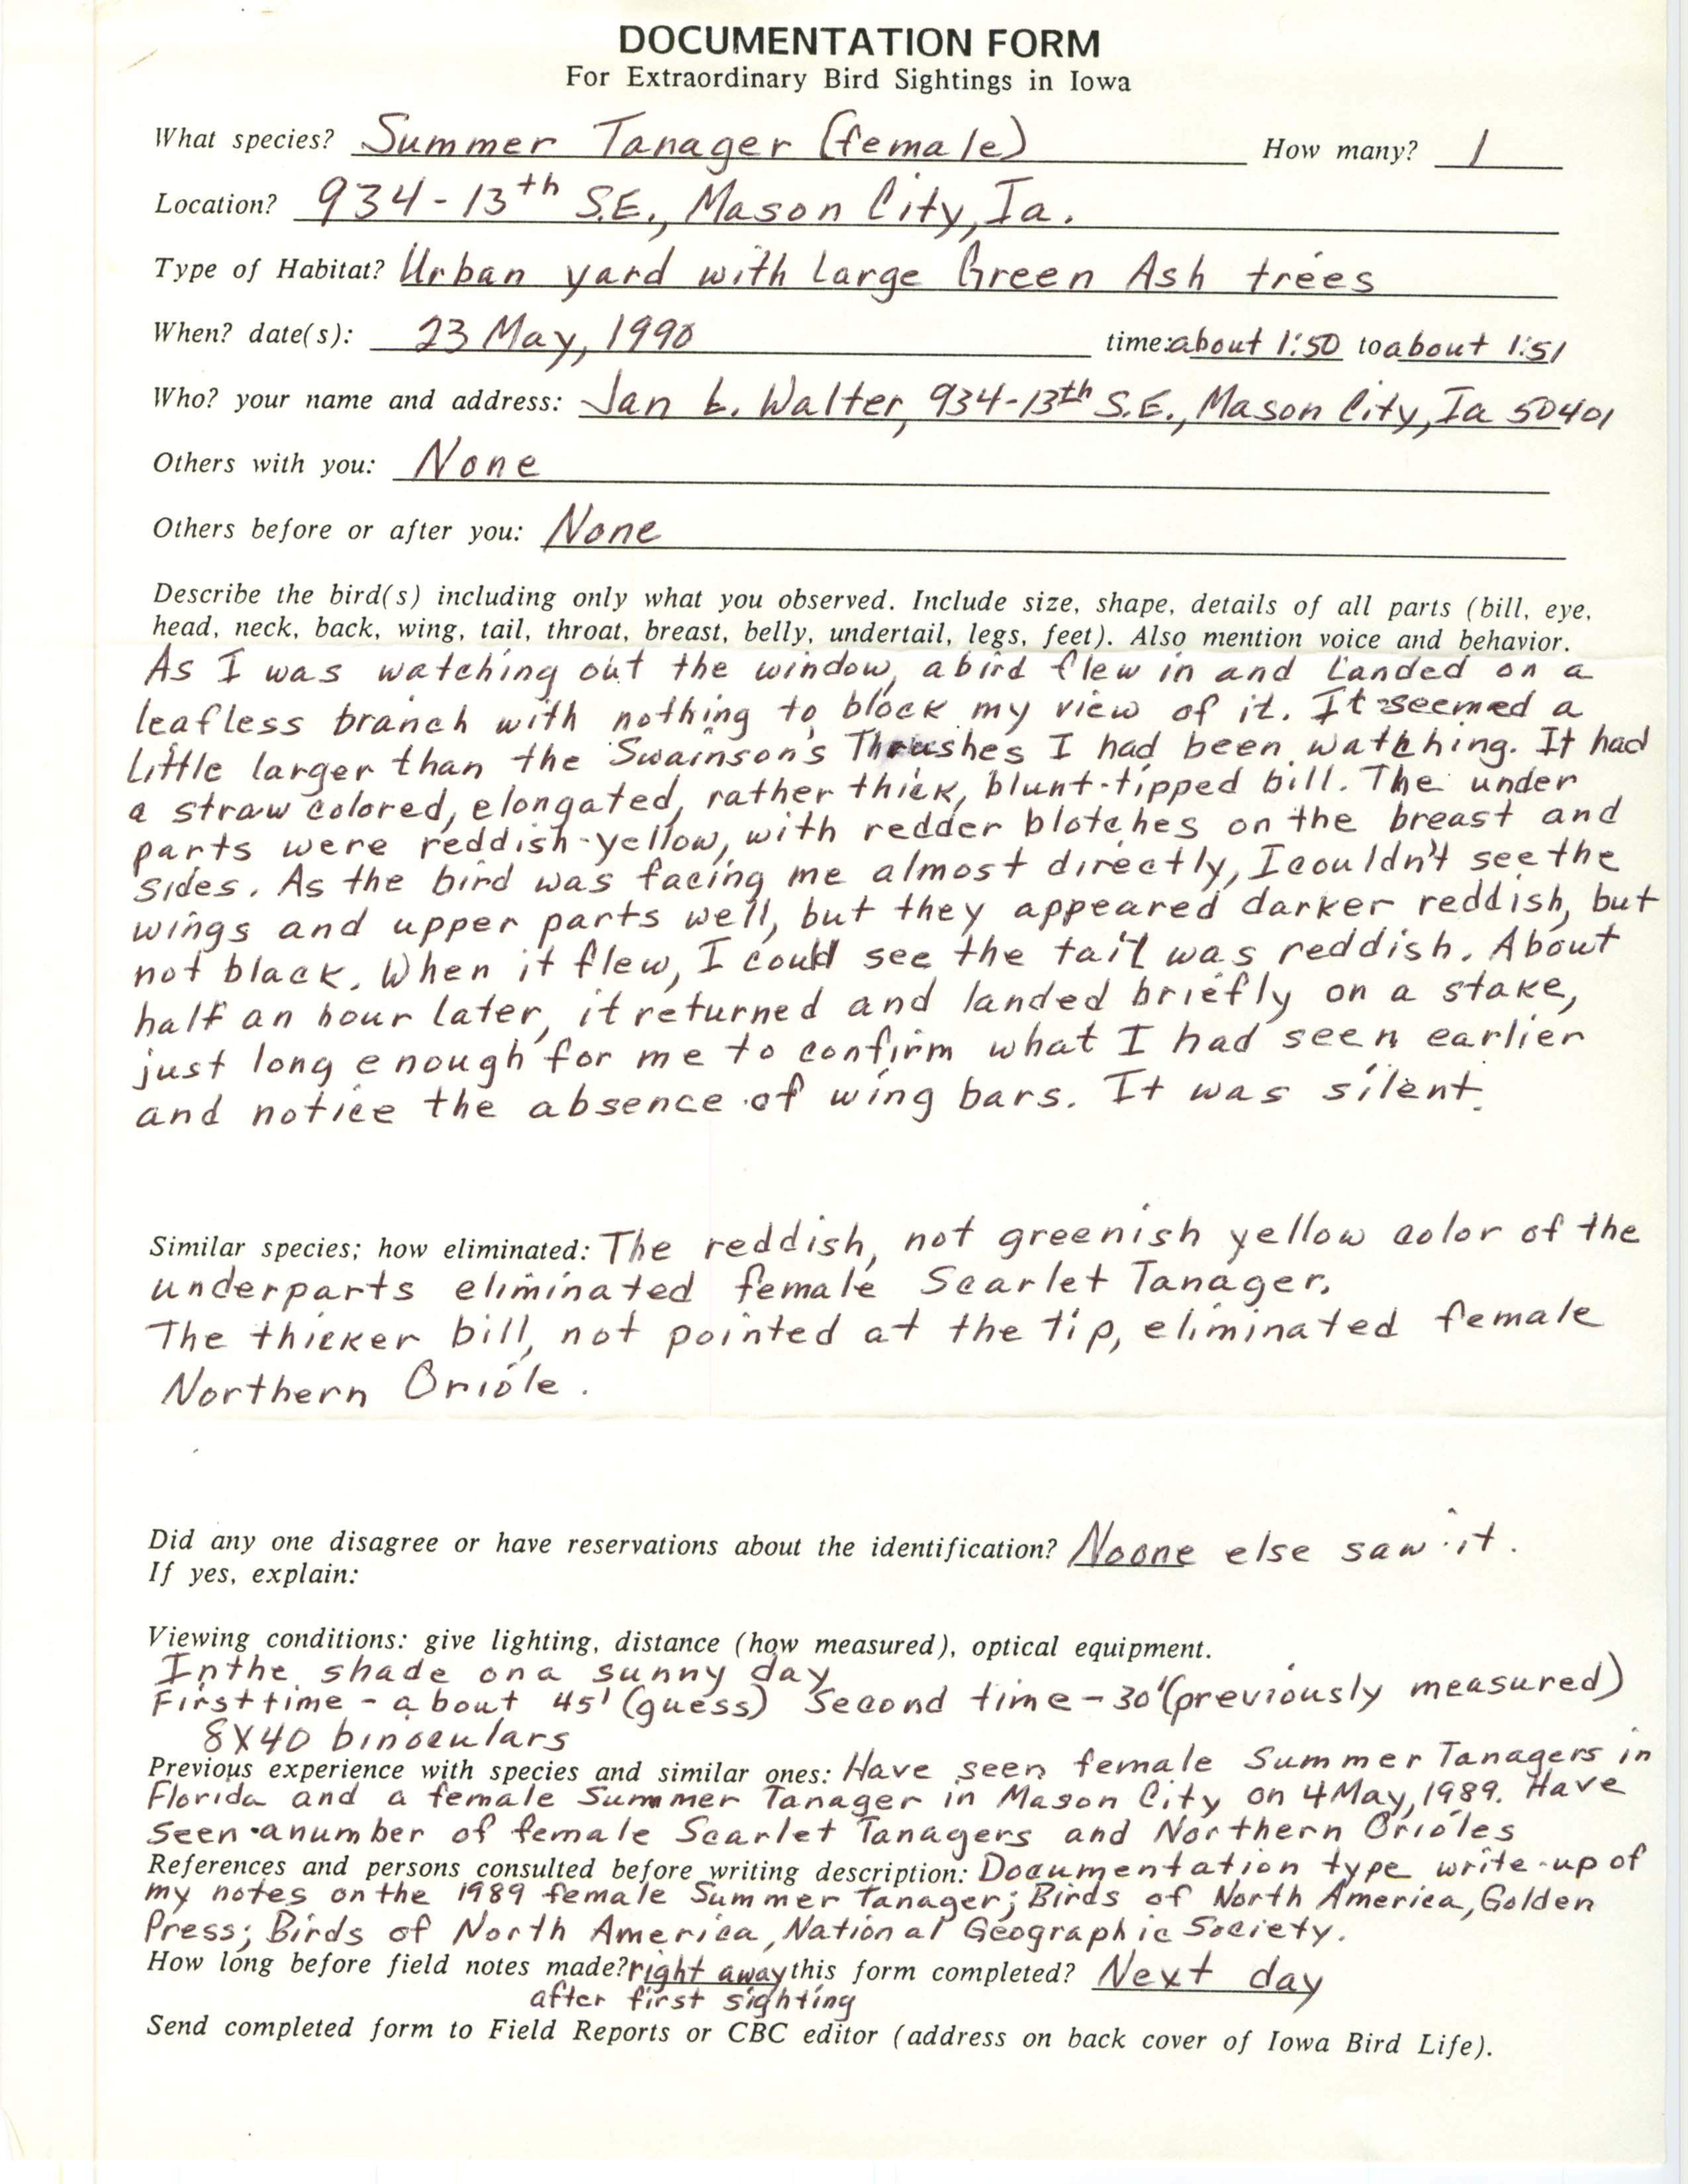 Rare bird documentation form for Summer Tanager at Mason City, 1990